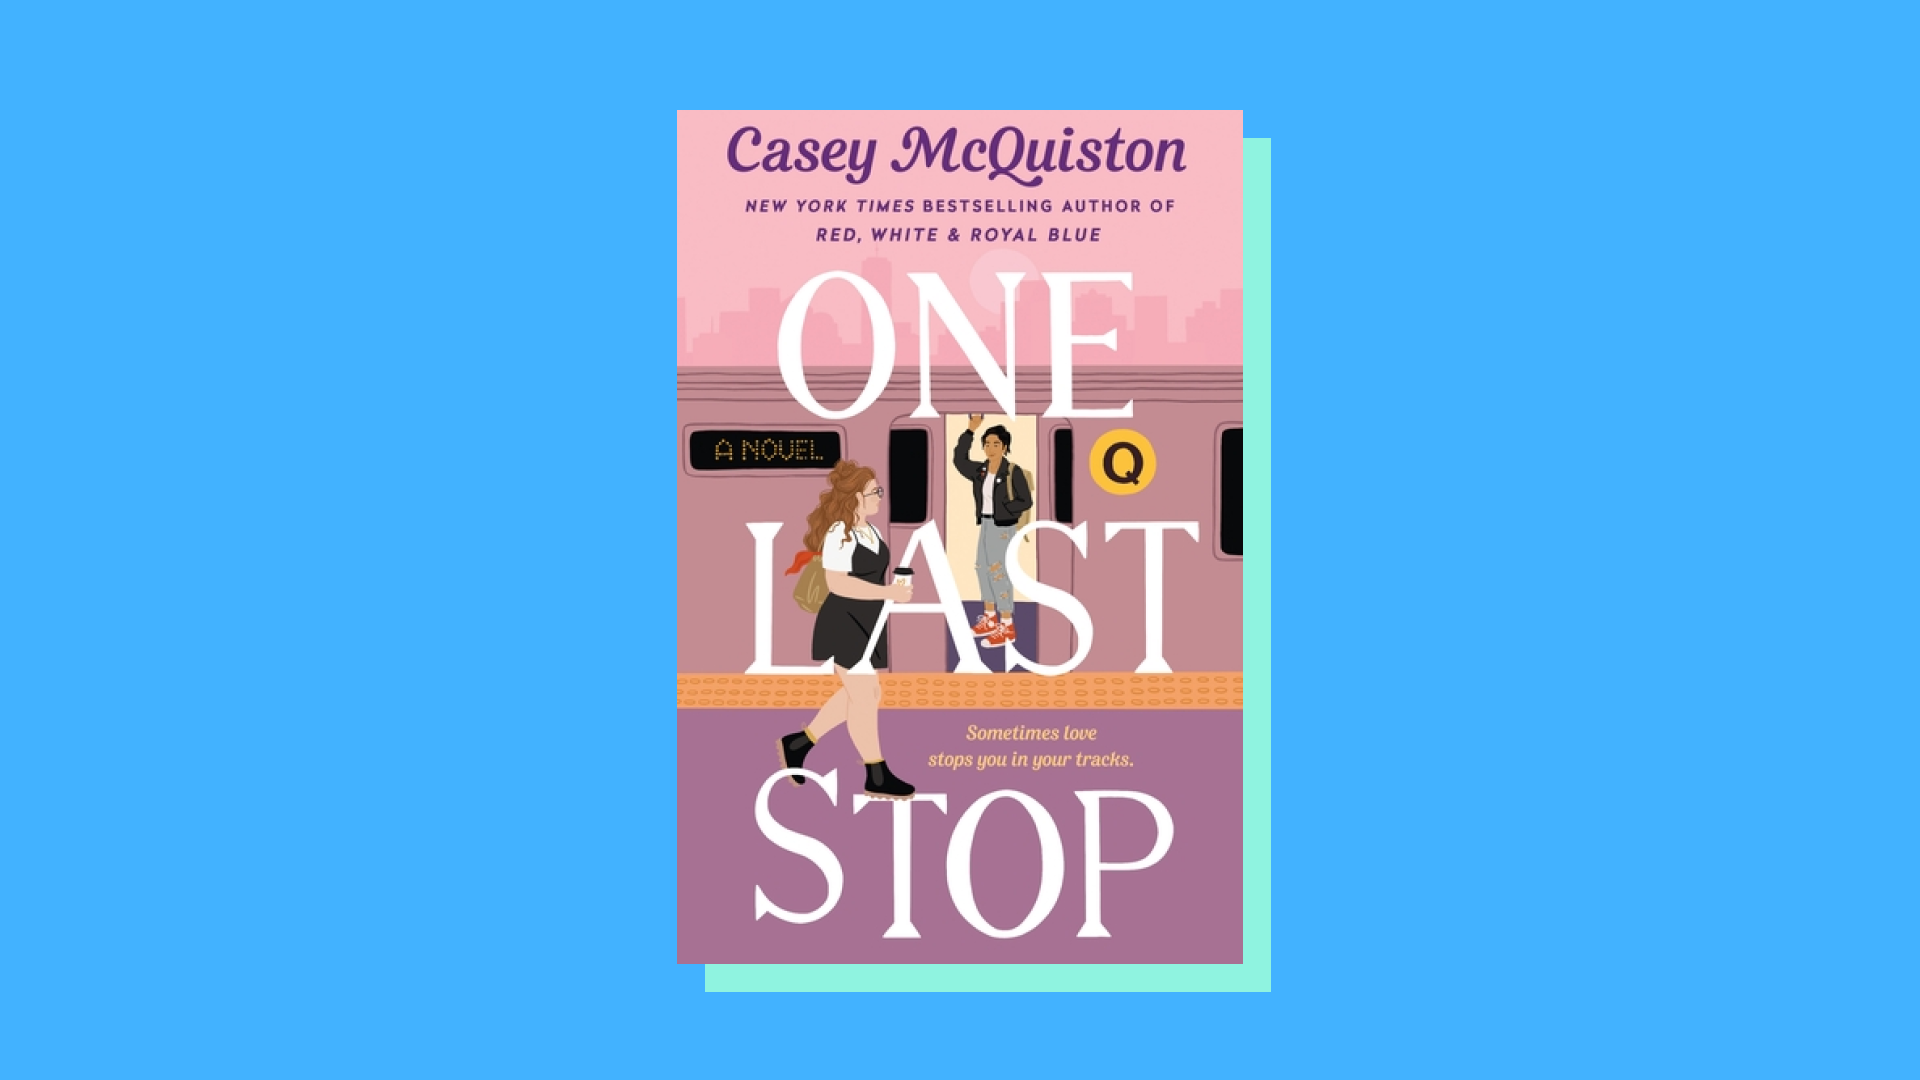 “One Last Stop” by Casey McQuiston 